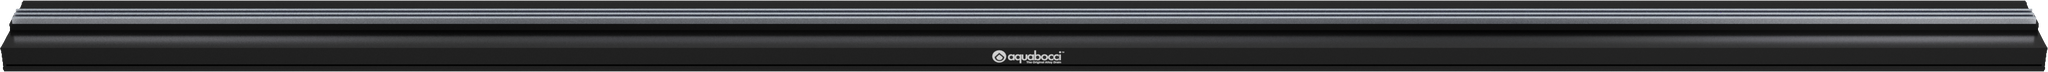 Blade Shower Kit | 2400mm / 94 Inch Length - Aquabocci Ltd